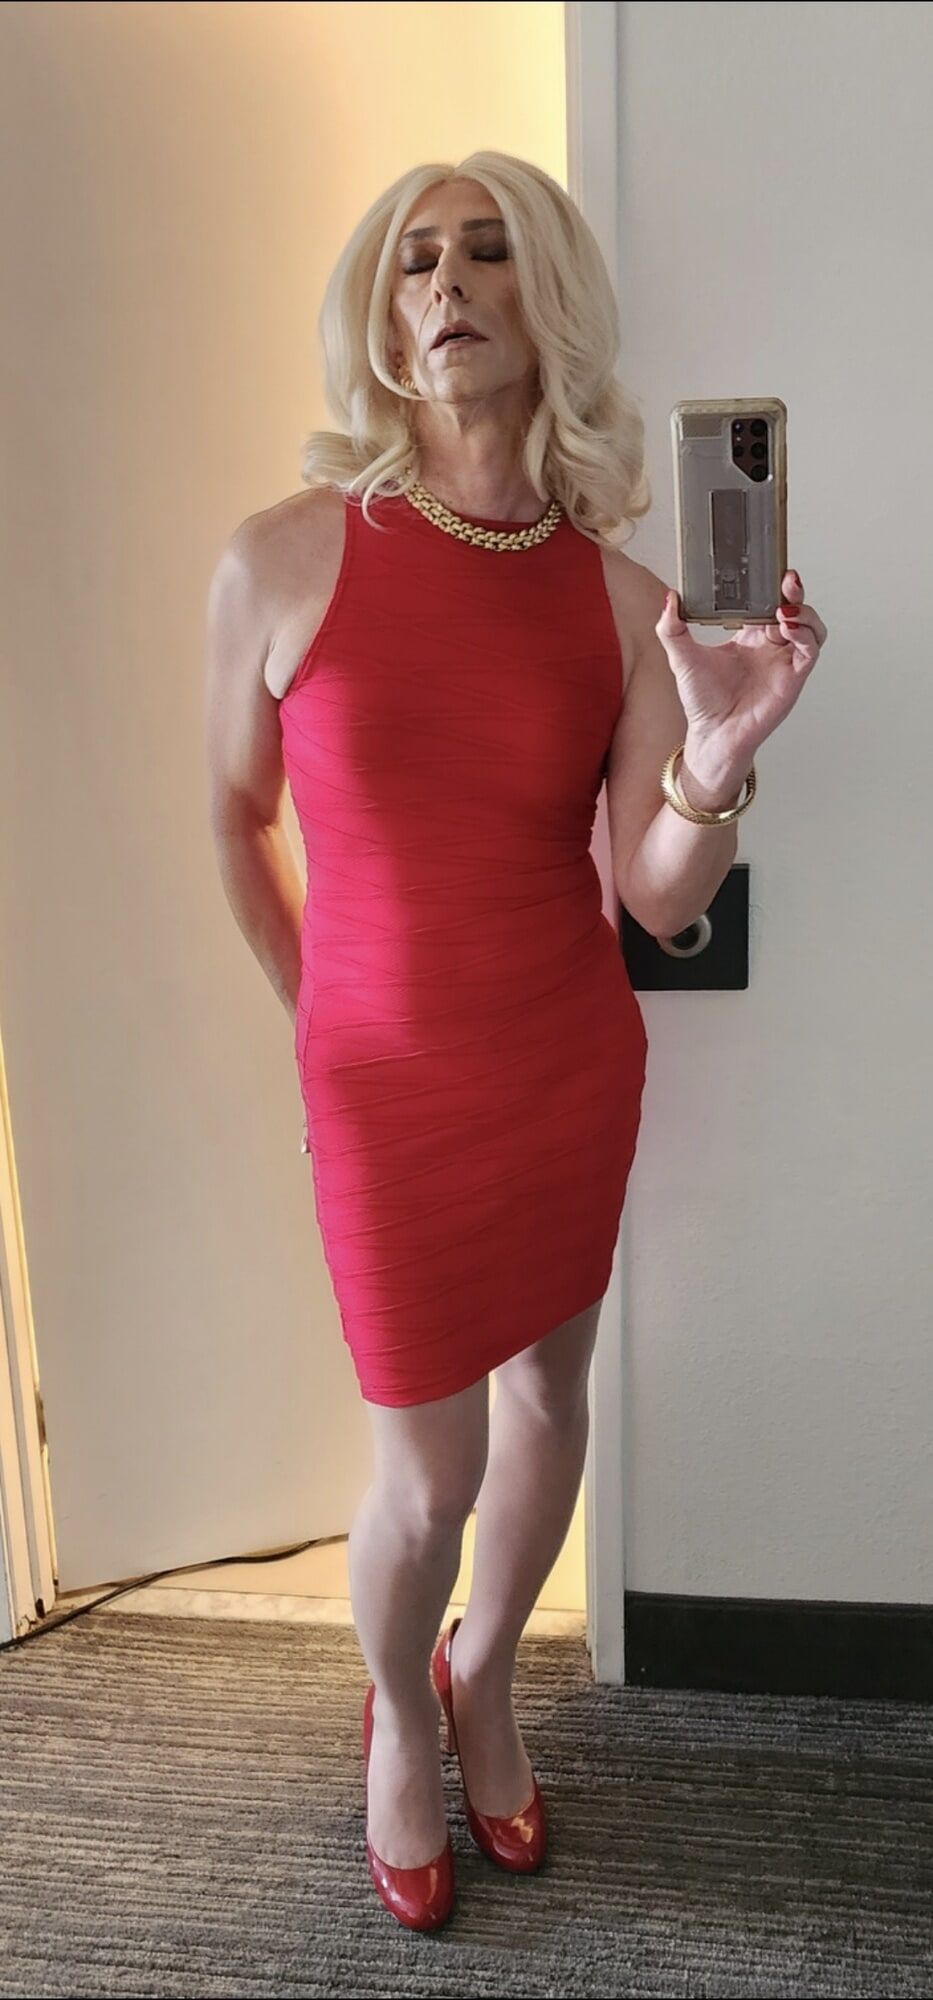 Red dress #2